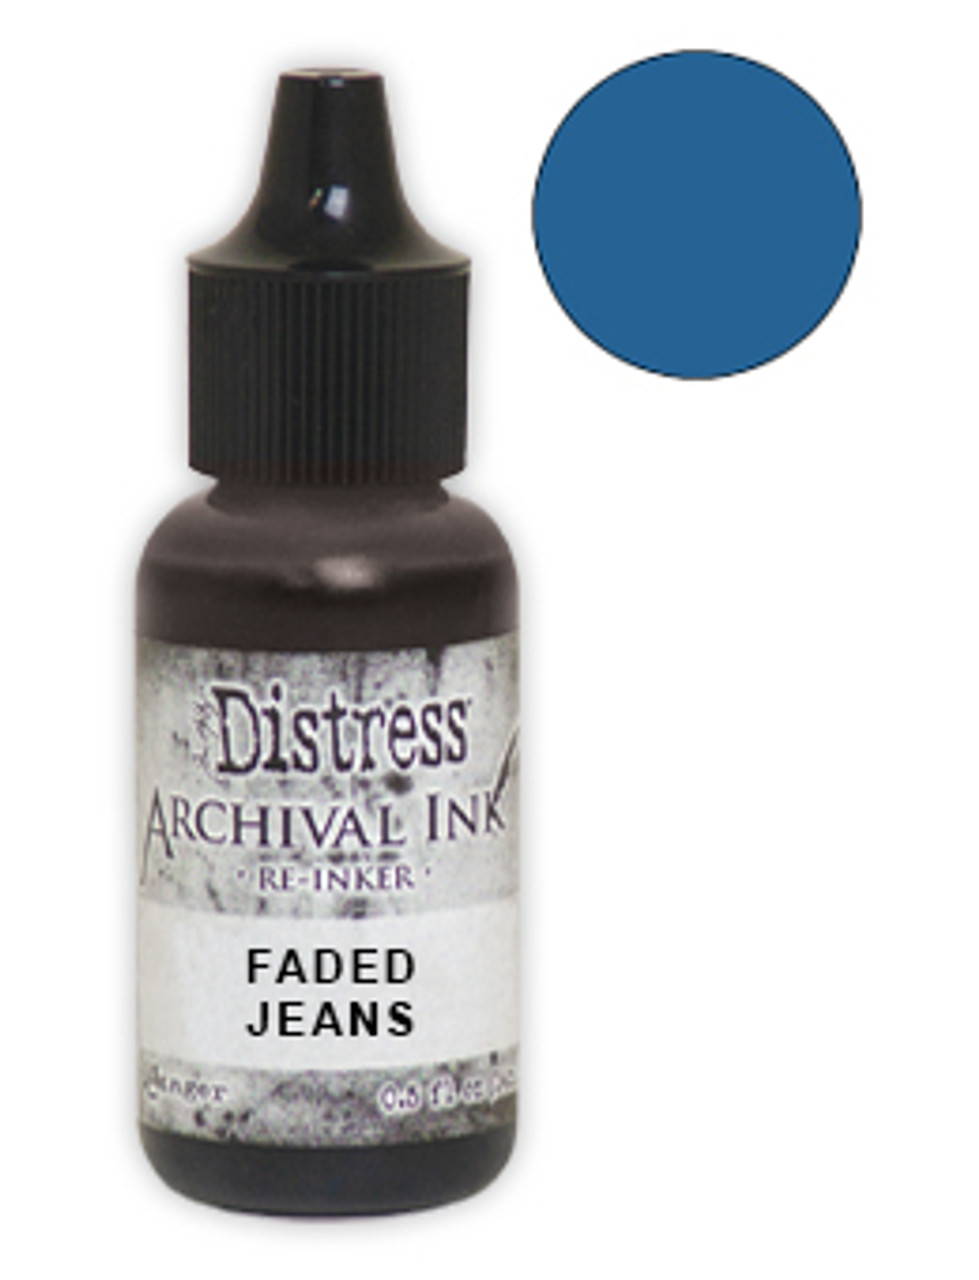 Tim Holtz Distress Oxide Ink Pad - Faded Jeans